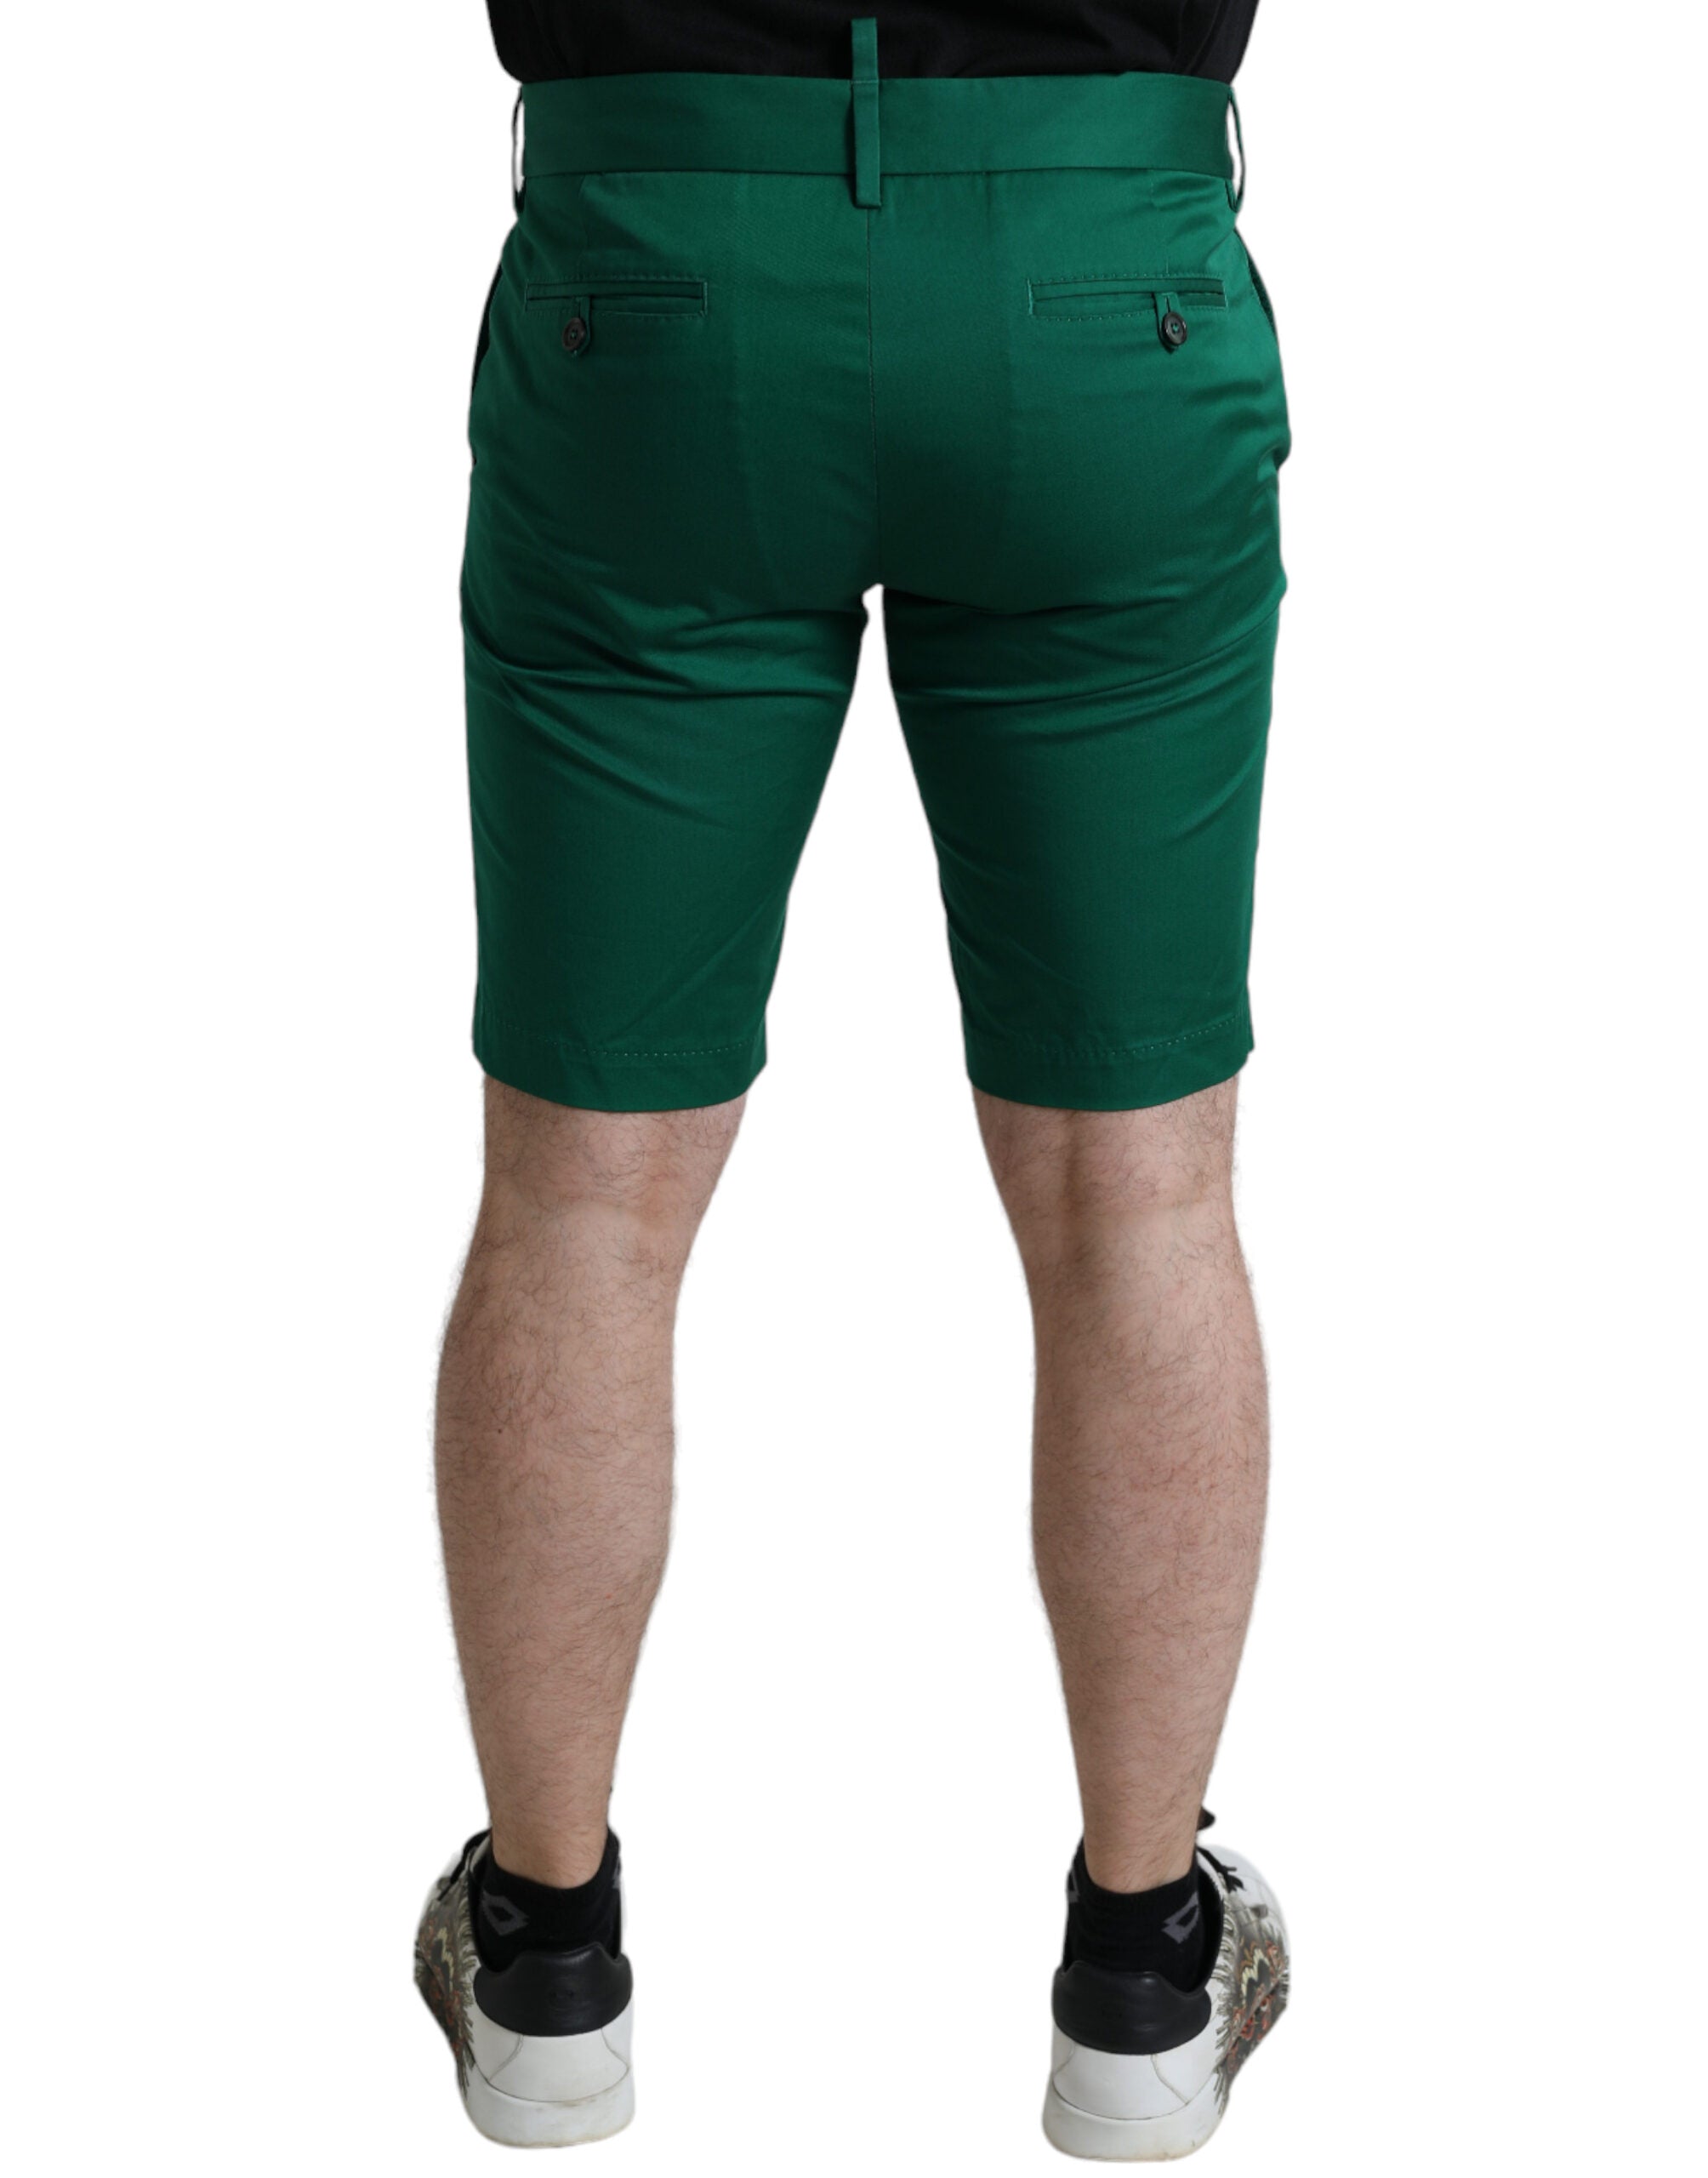 Dolce & Gabbana Elegant Deep Green Cotton Bermuda Shorts